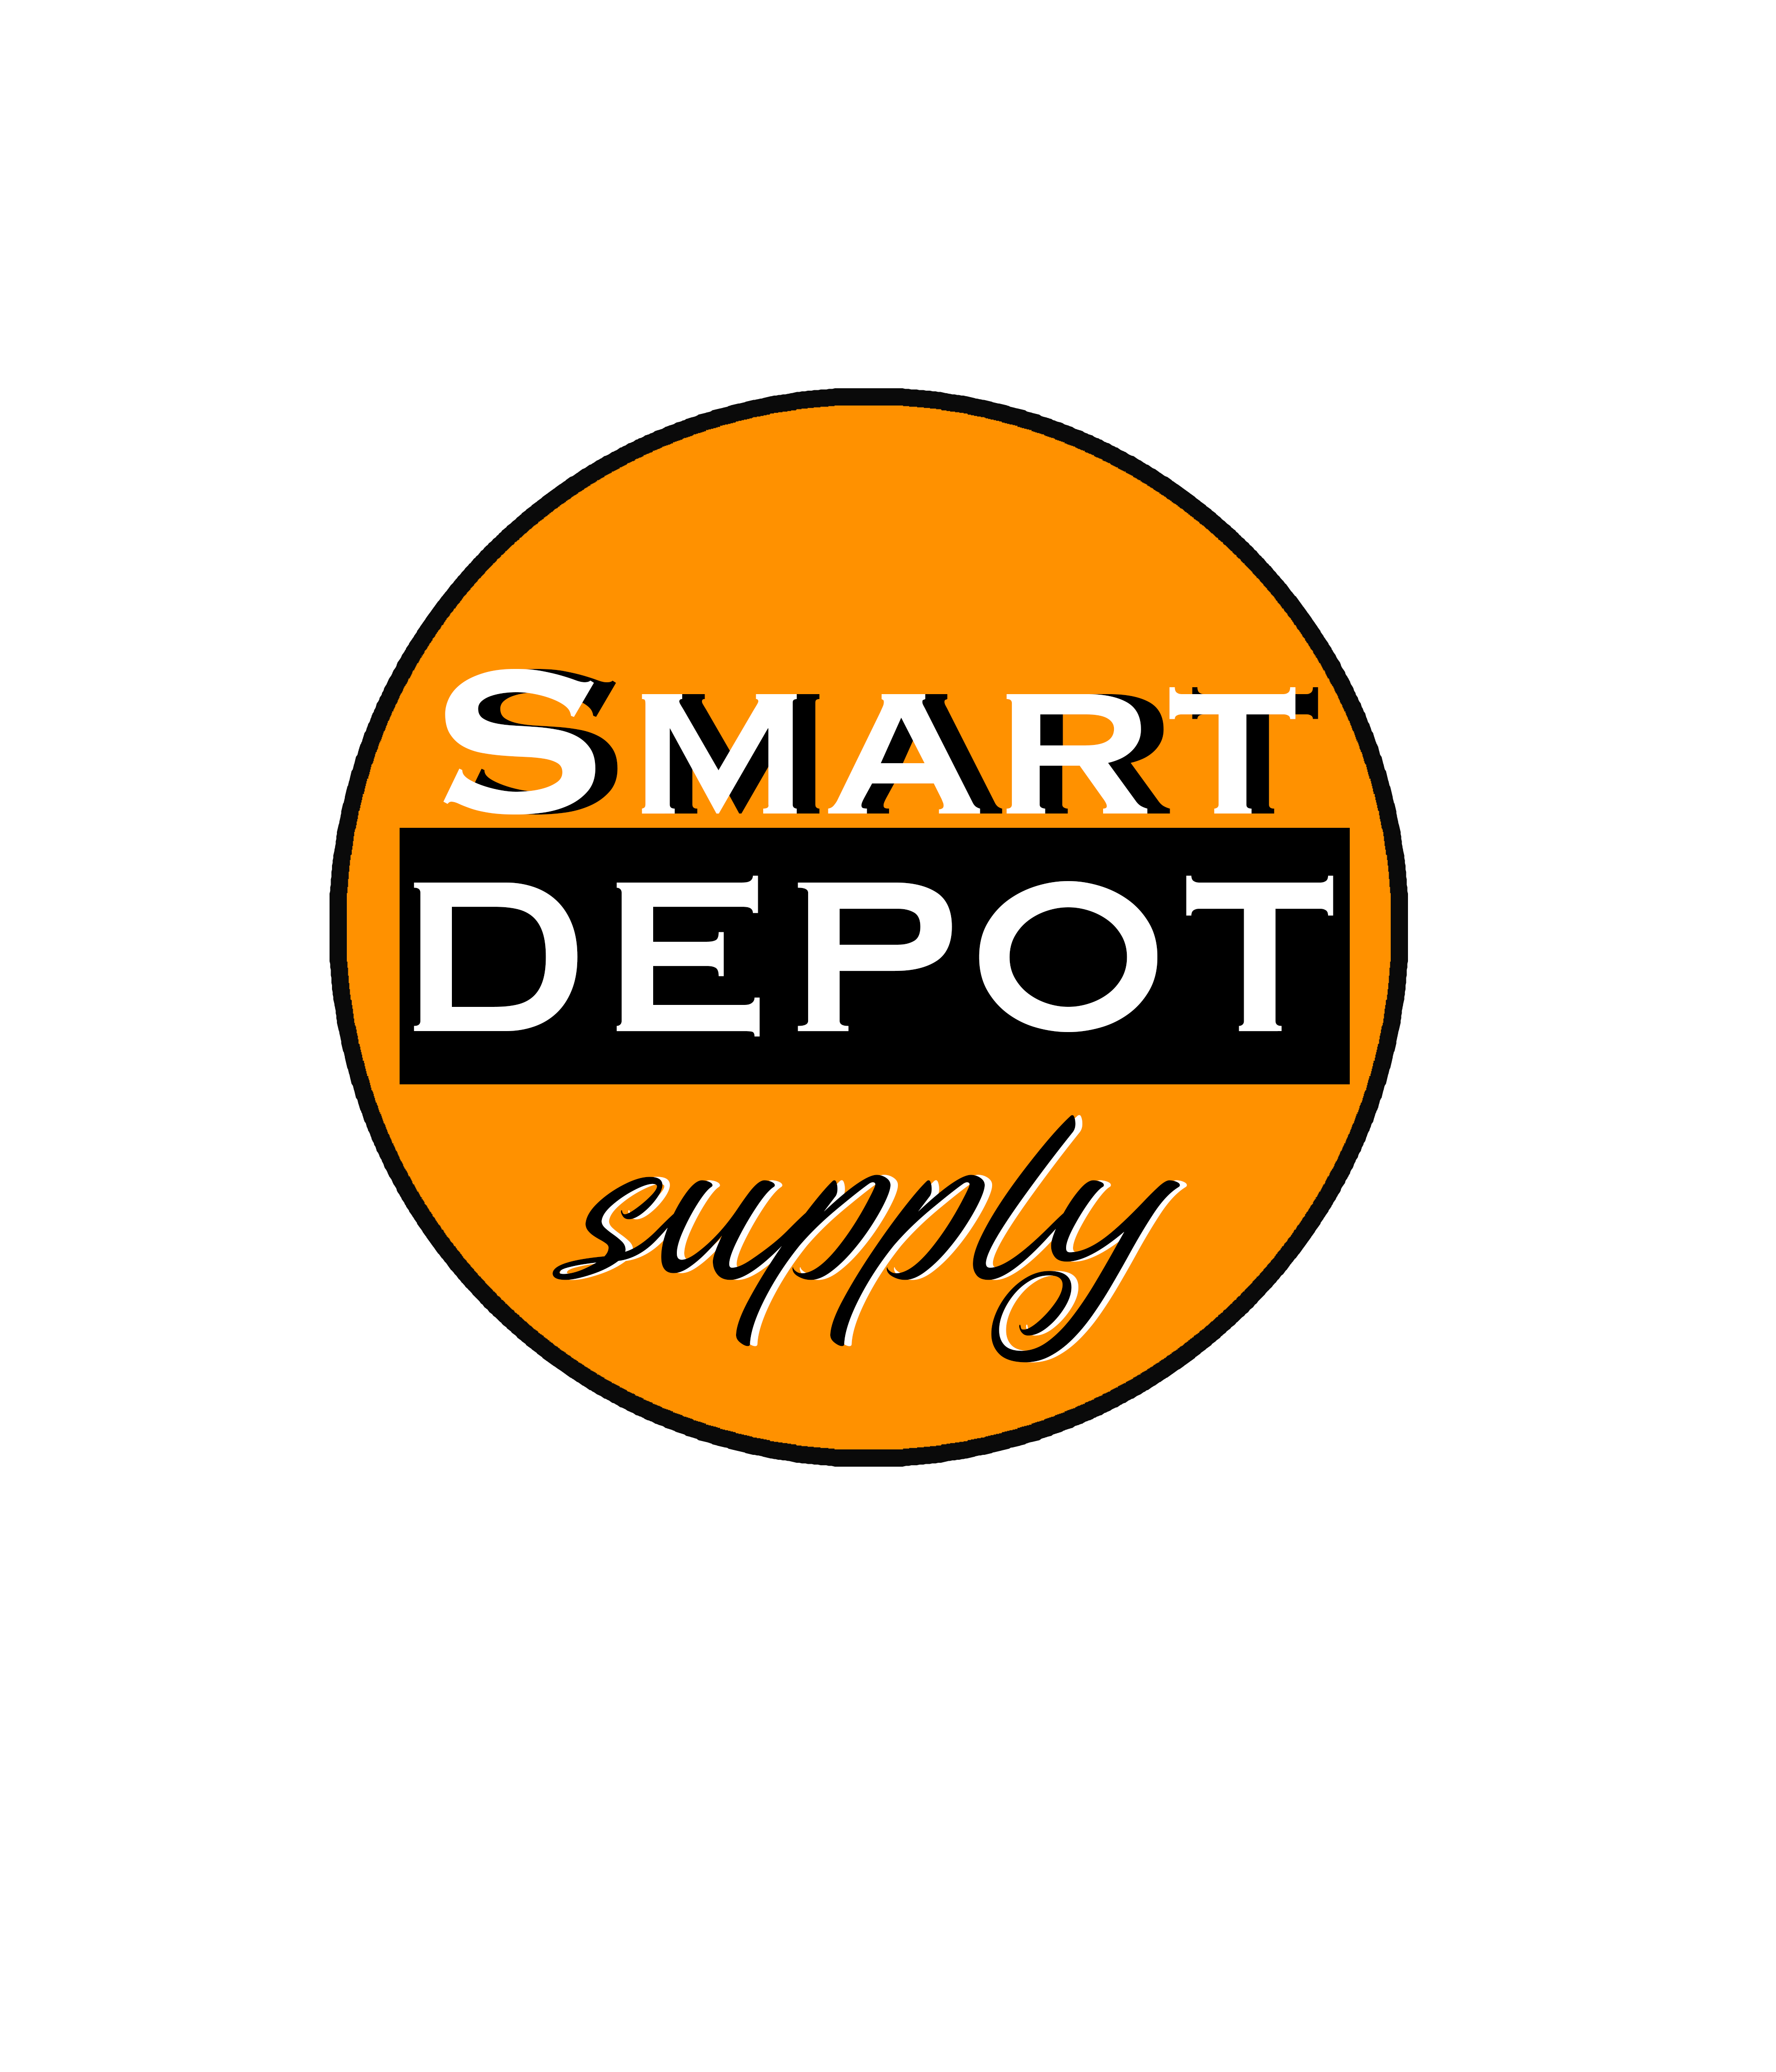 Smart Depot Supply